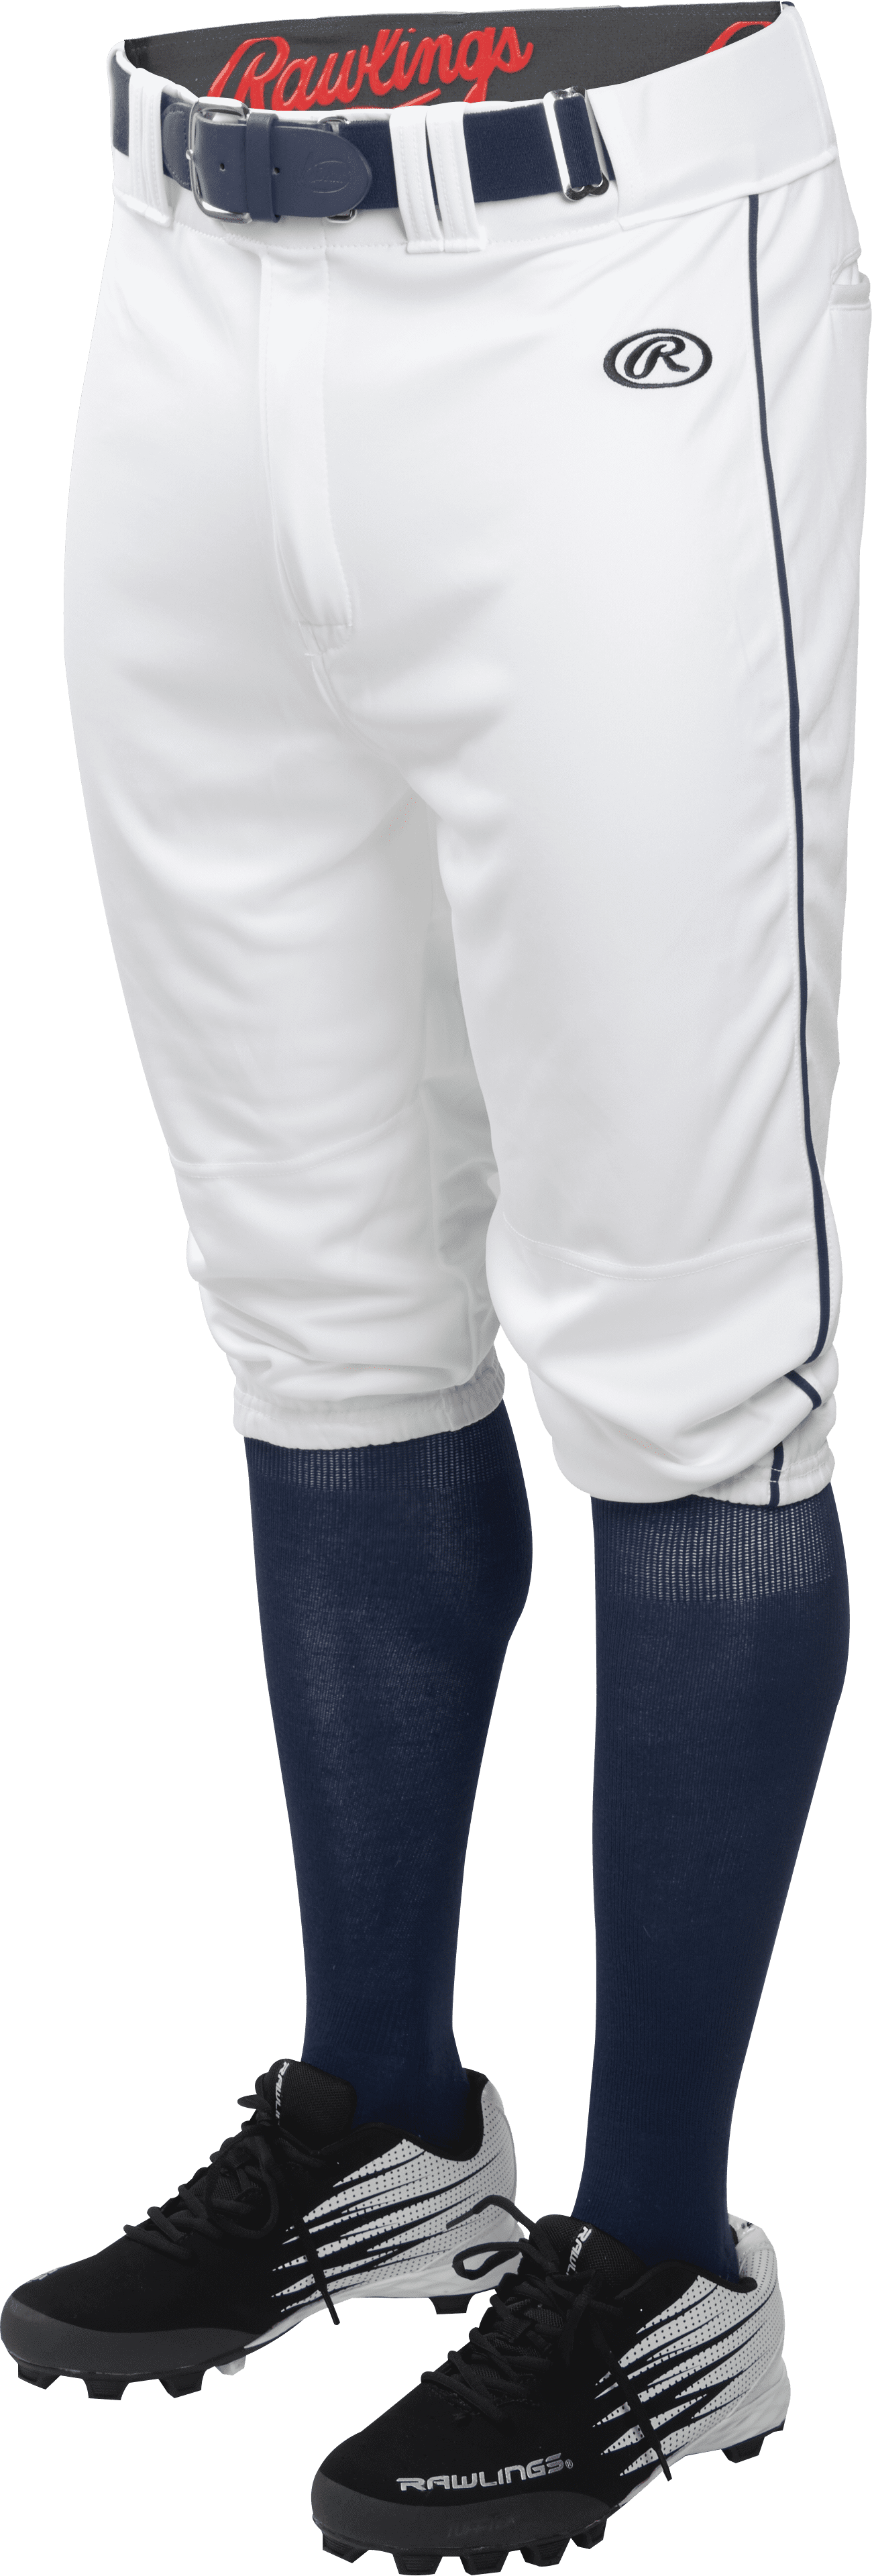 Rawlings Men's Launch Knicker Baseball Pant 